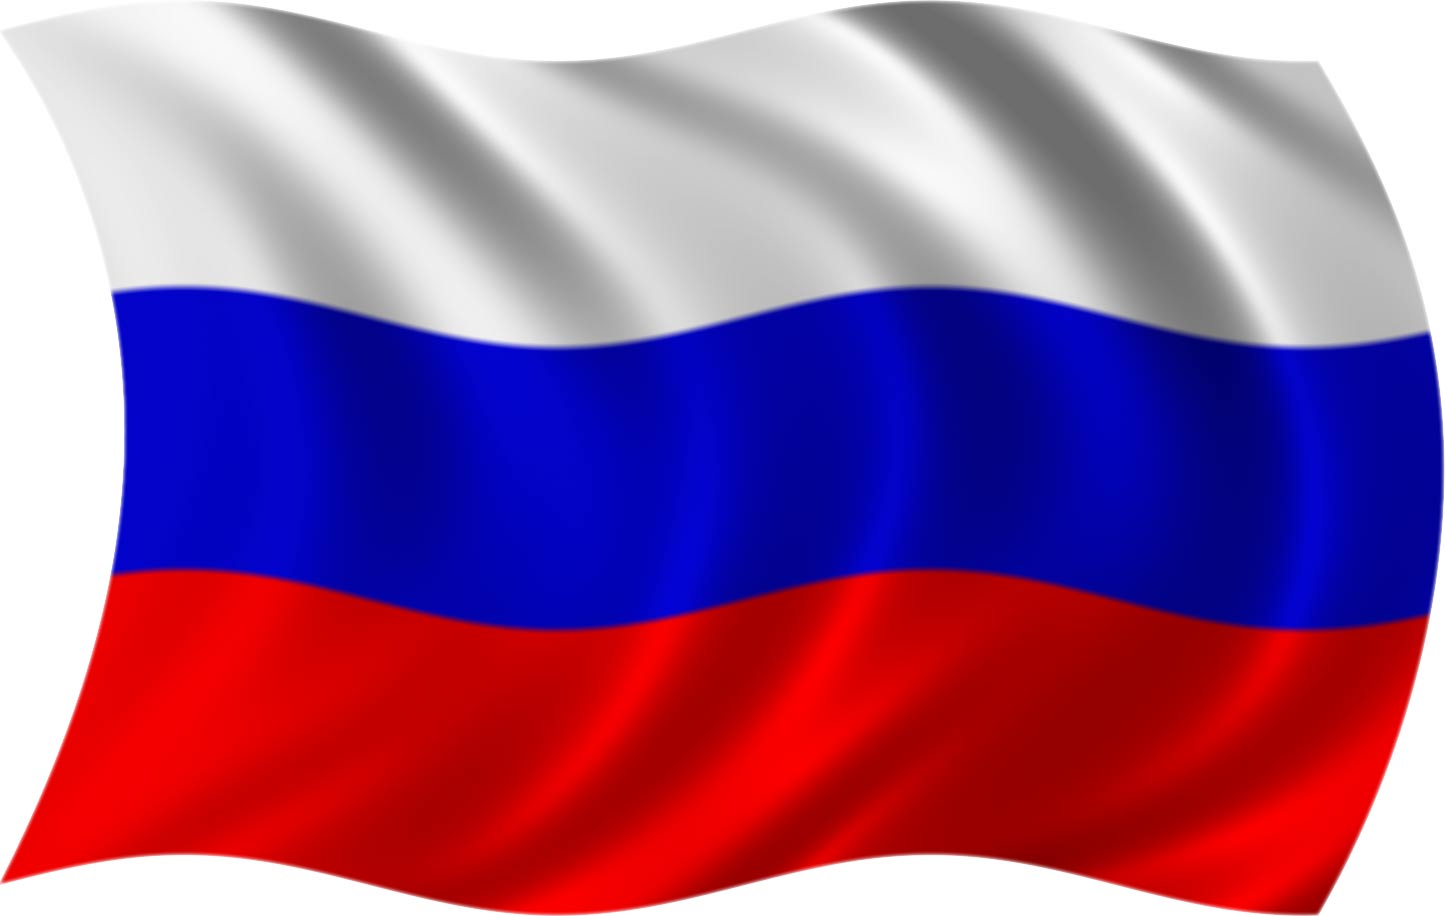 Как выглядит флаг картинка. Флаг РФ. Русский флаг. Триколор флаг. Флаг России развивающийся.